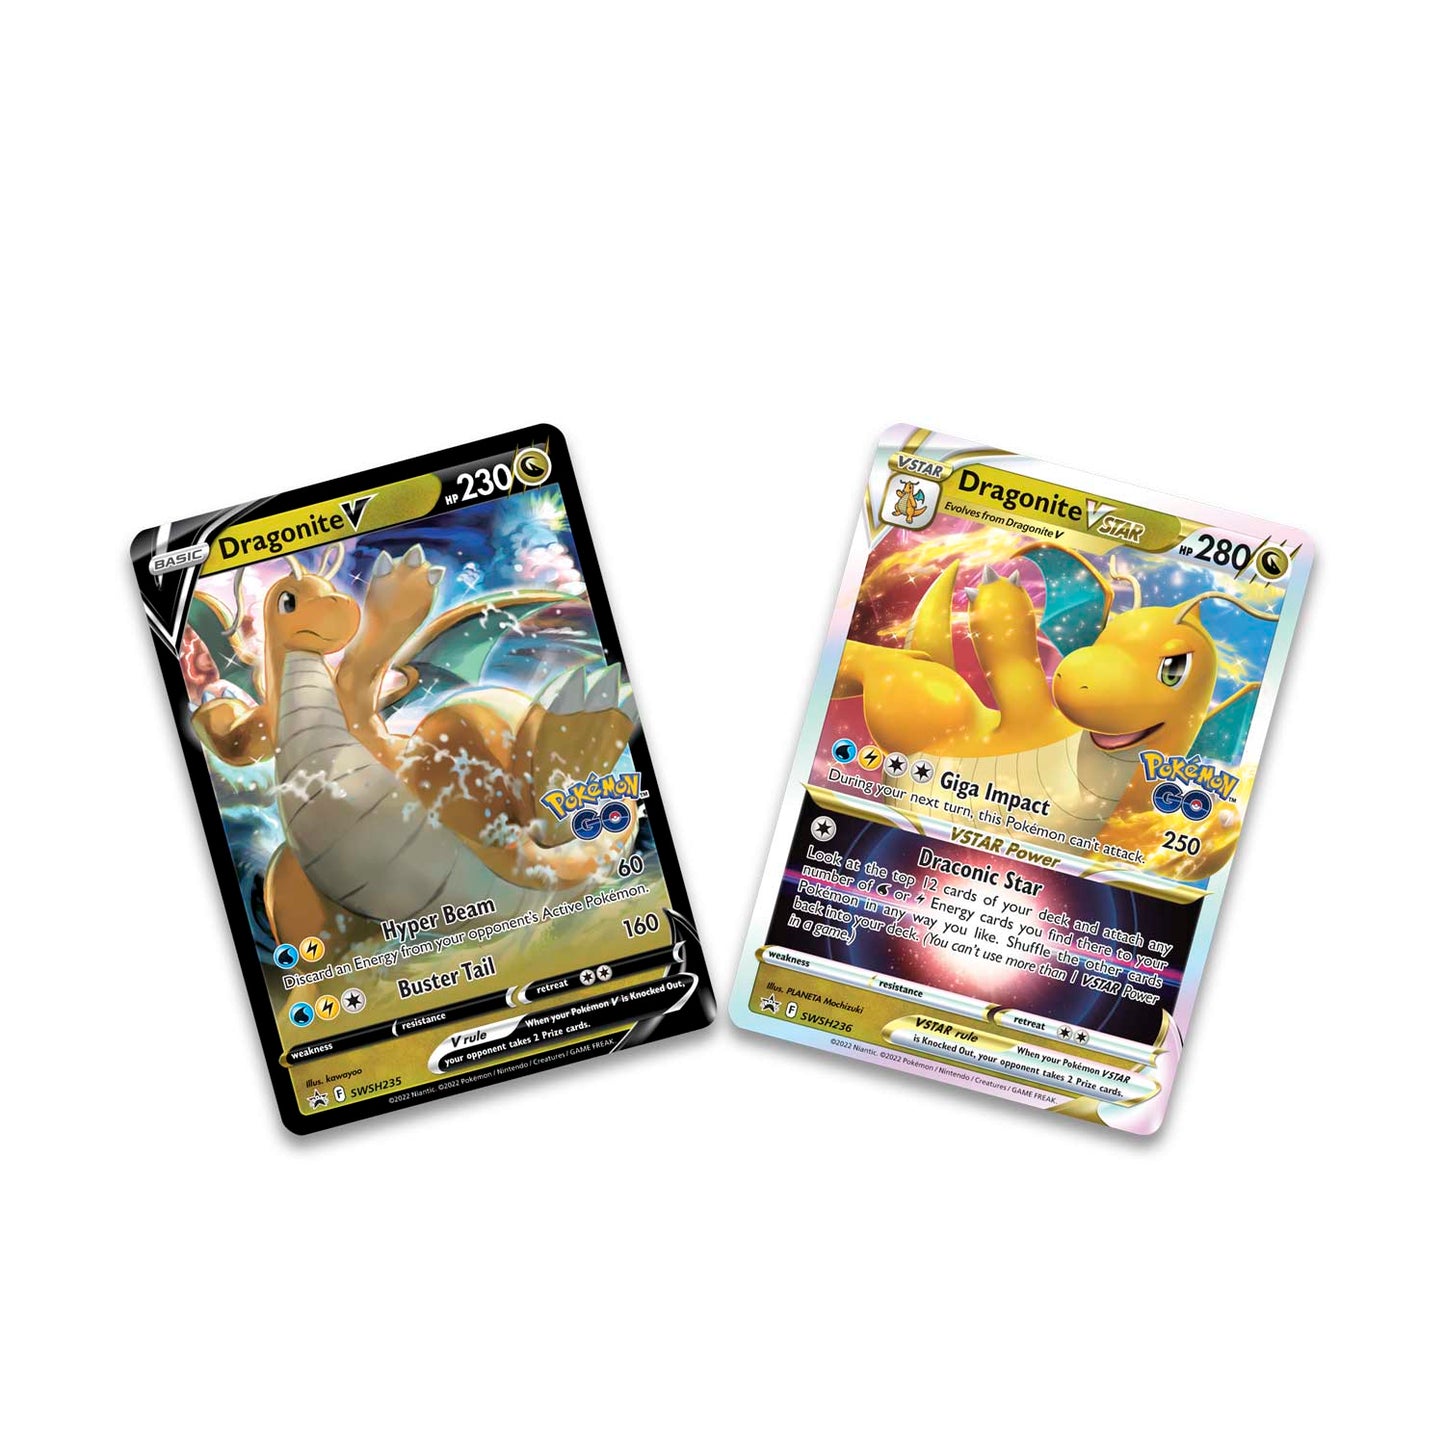 Pokémon TCG: Pokémon GO Premier Deck Holder Collection (Dragonite VSTAR)